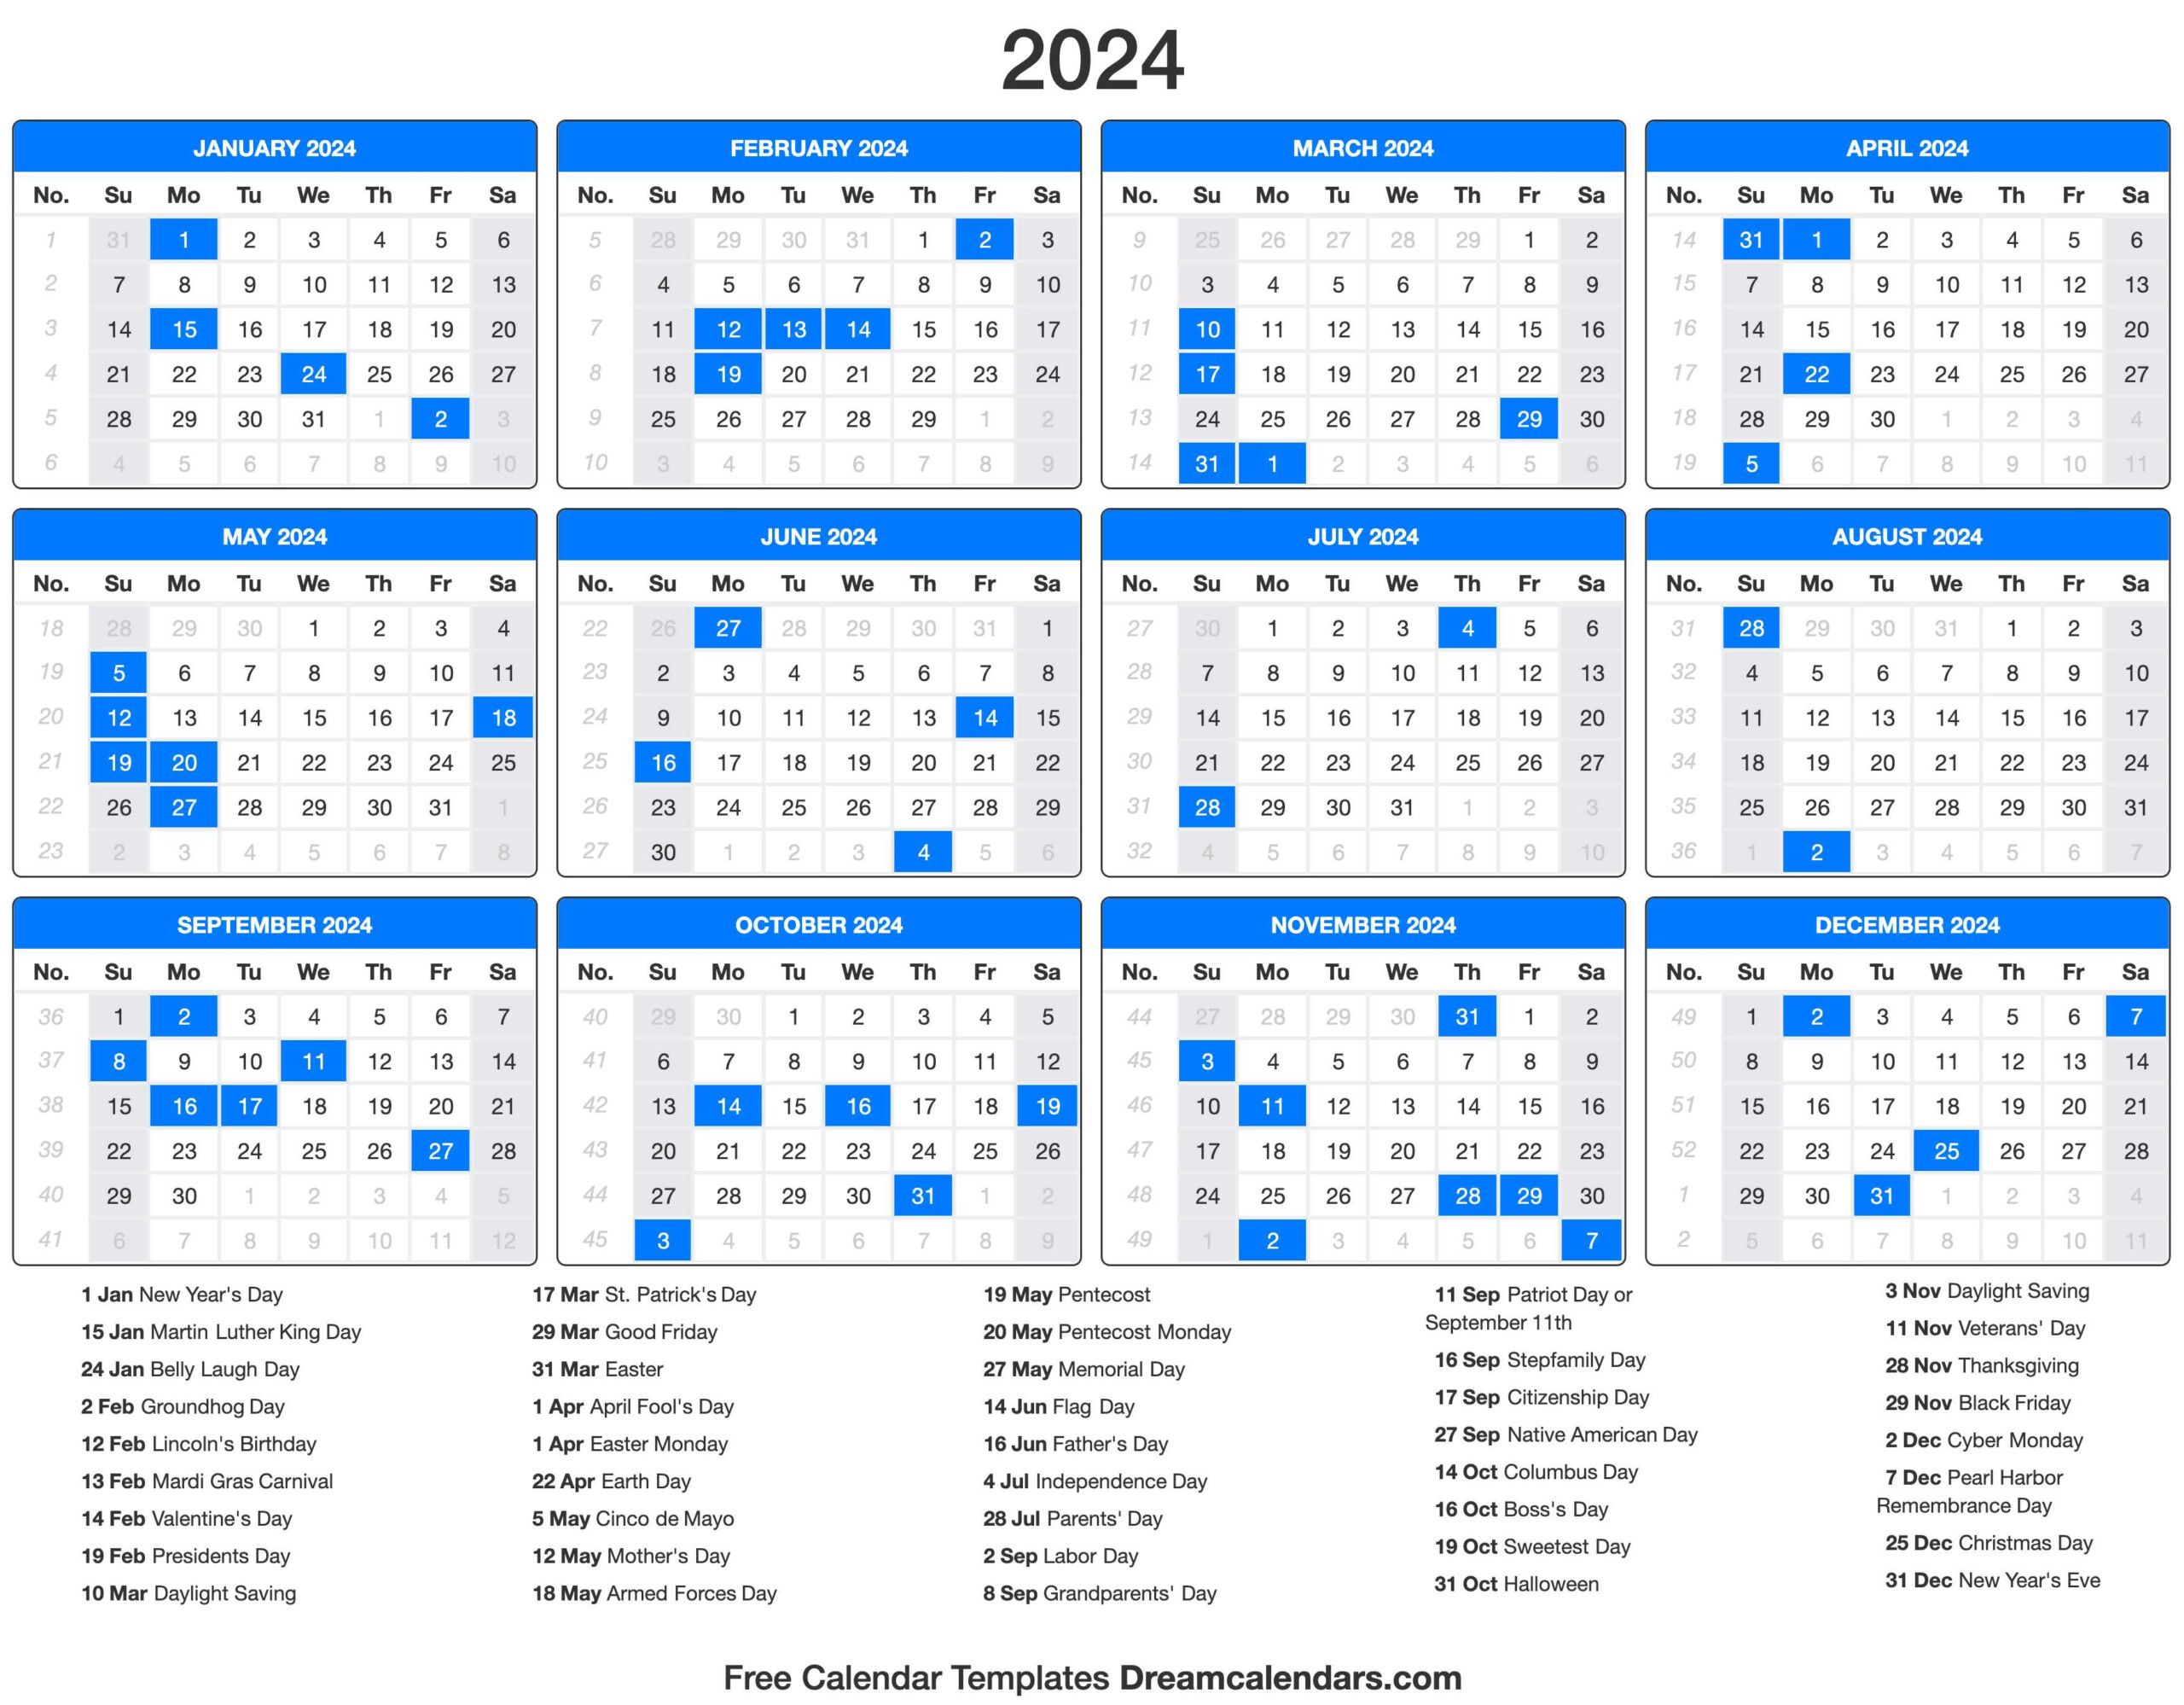 2024 Holiday Calendar 2024 Calendar Printable 2024 Excel Calendar With Holidays Free Printable